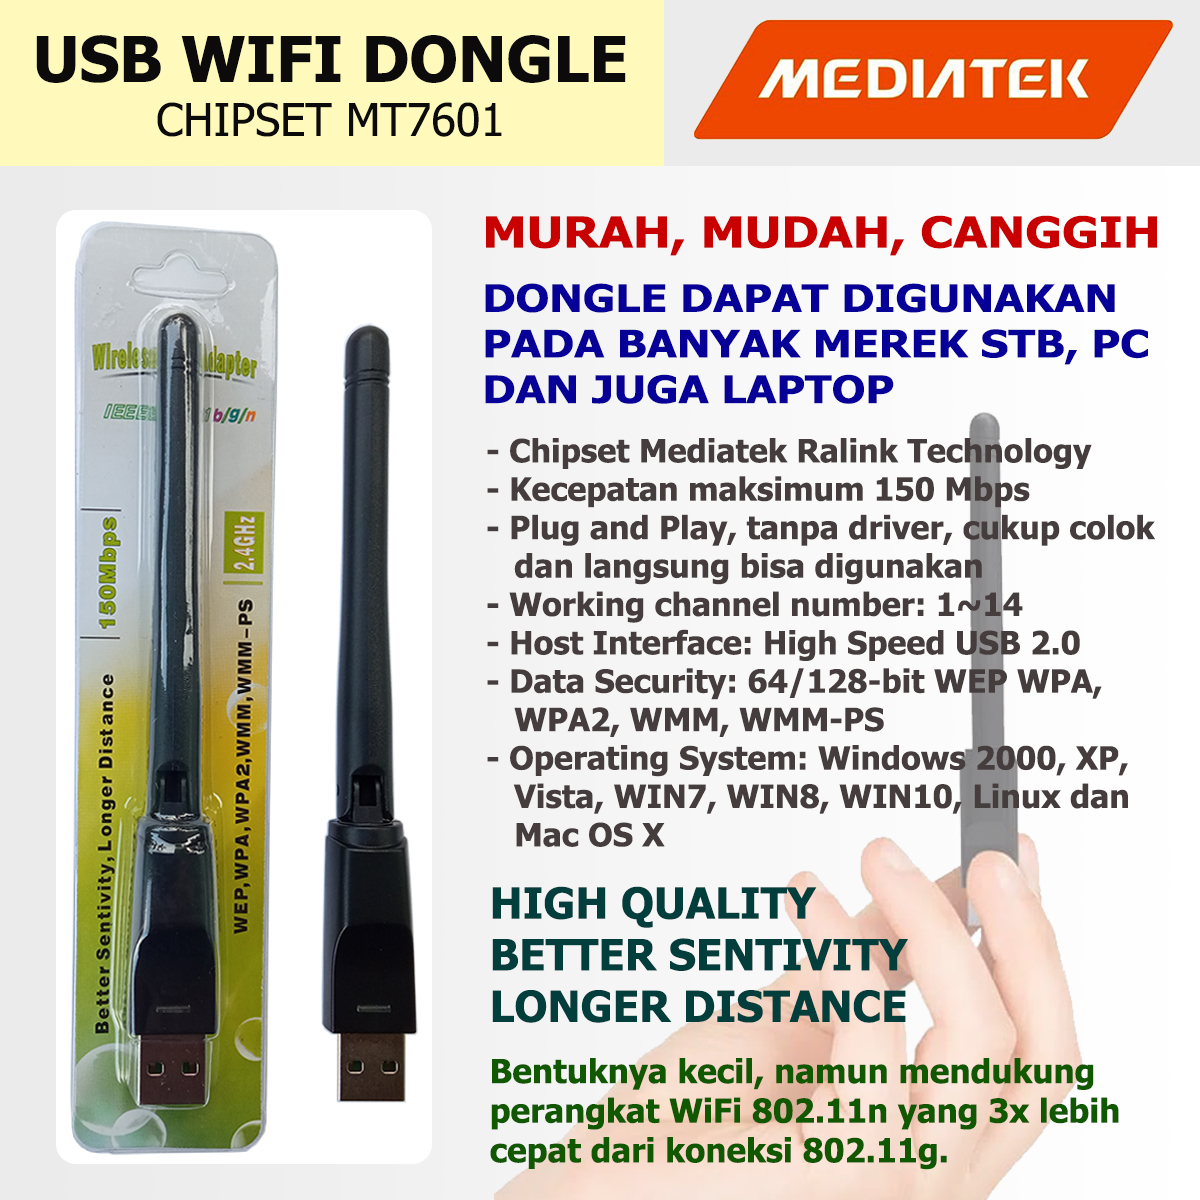 USB WiFi Dongle Chipset Mediatek Ralink MT7601